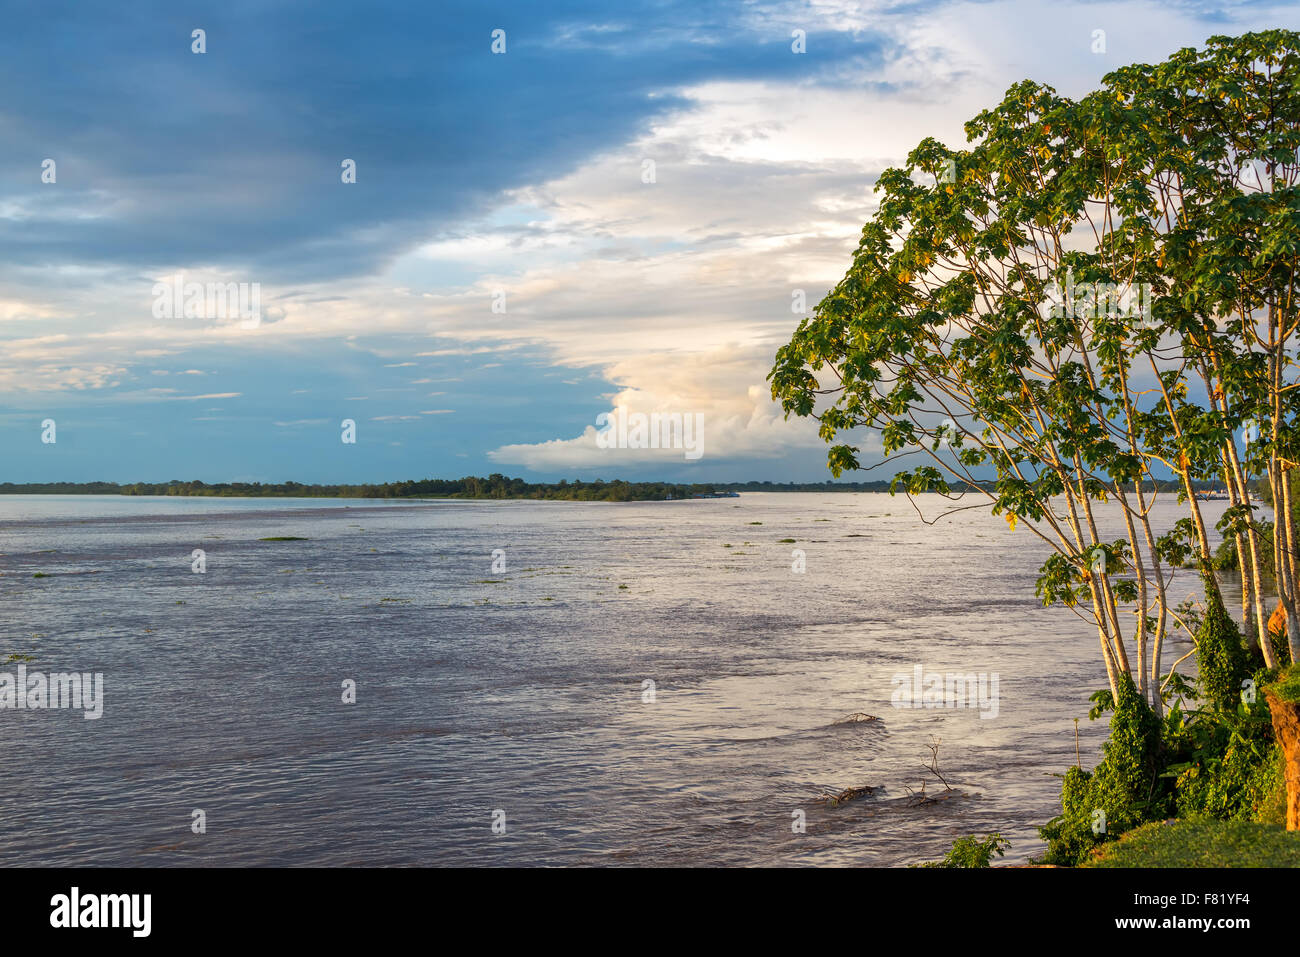 View of the Amazon River near Tabatinga, Brazil Stock Photo